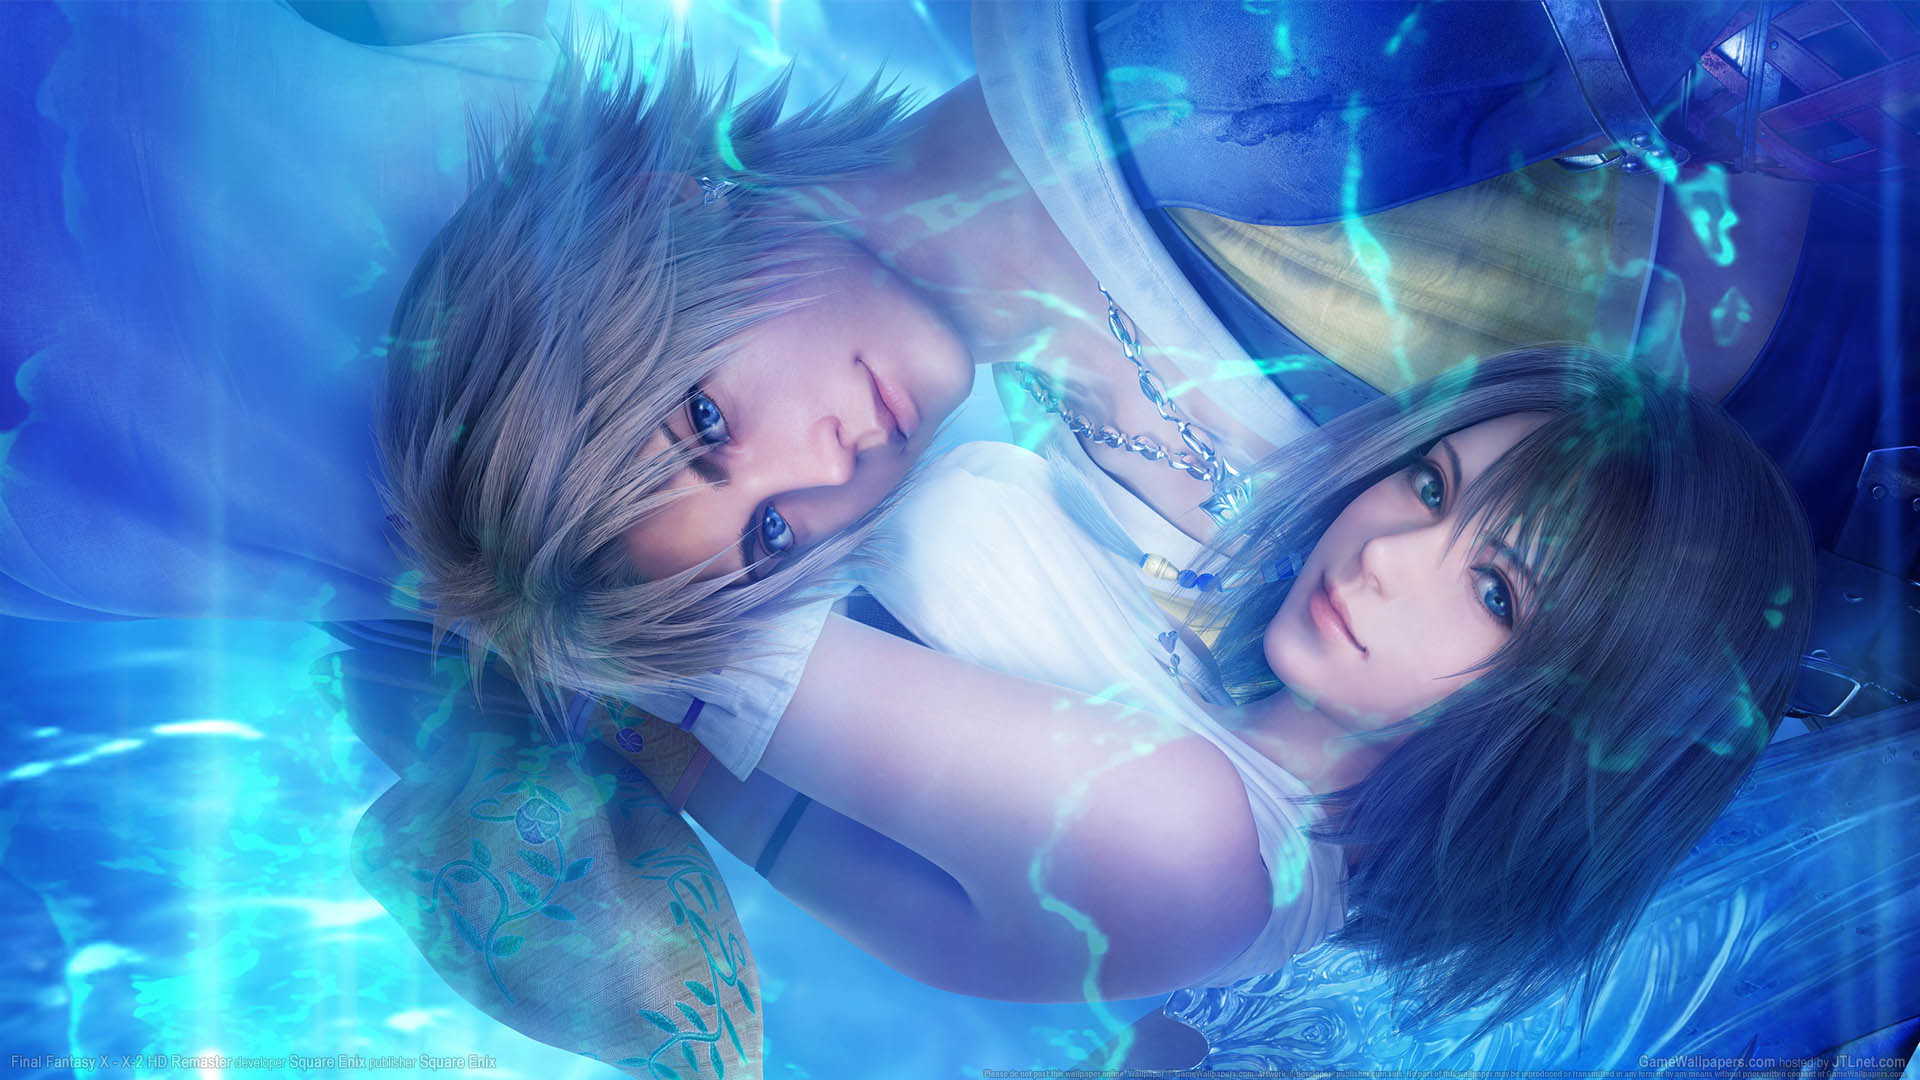 Final Fantasy X – X 2 HD wallpaper or background 01